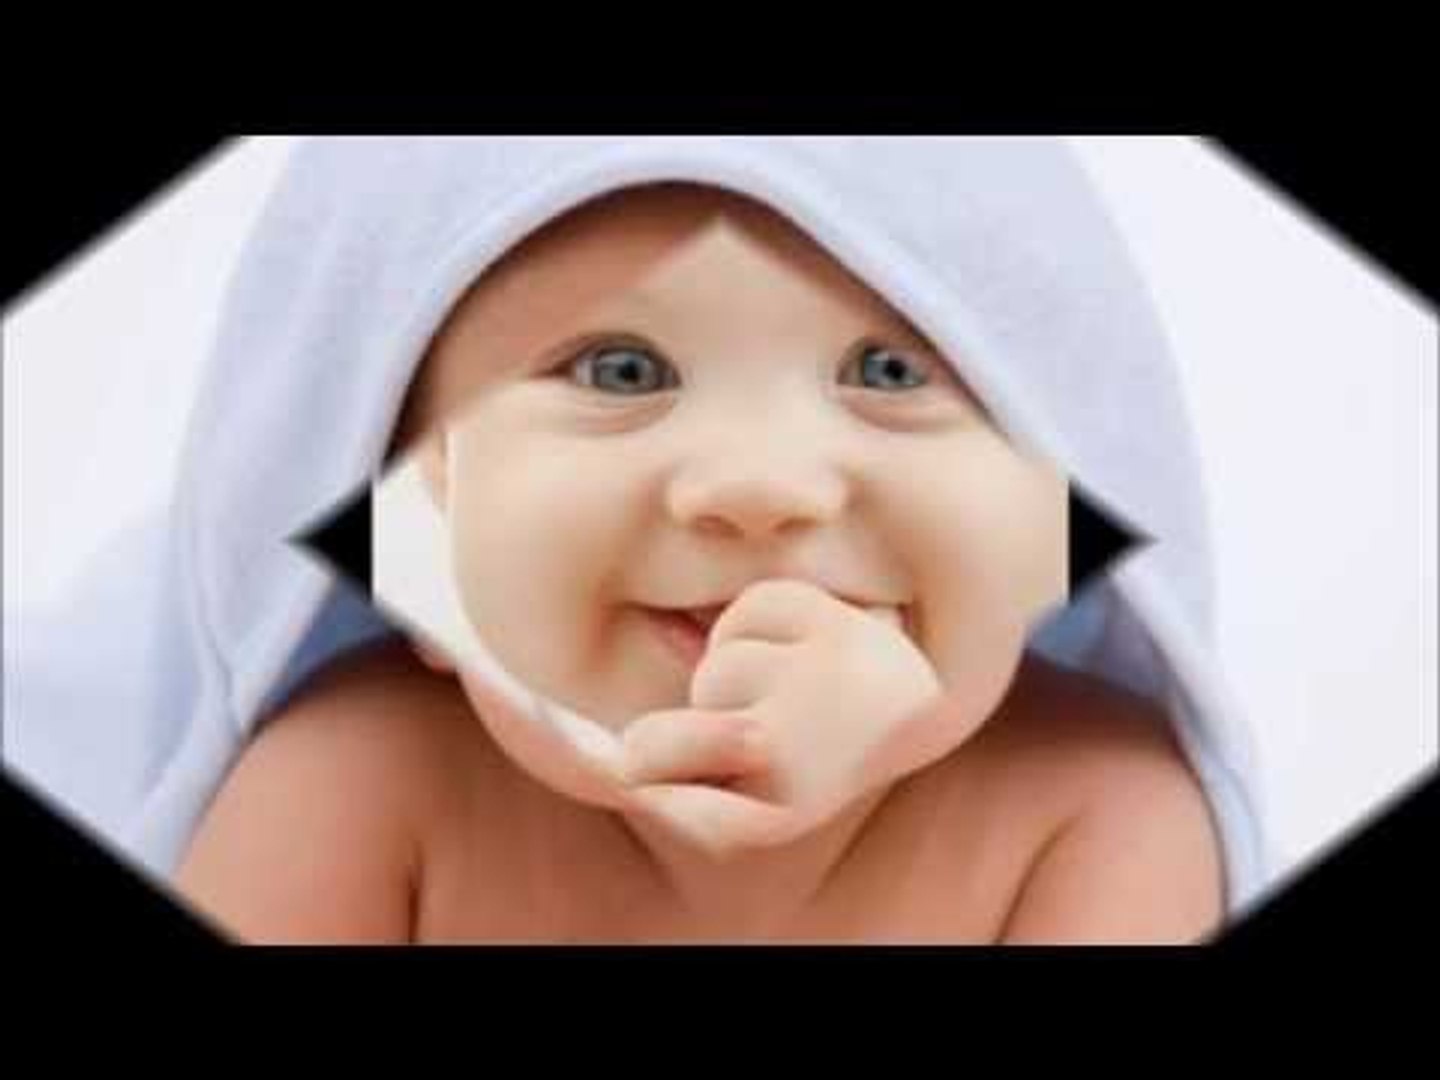 Kumpulan Gambar Bayi Lucu 2015 Video Dailymotion